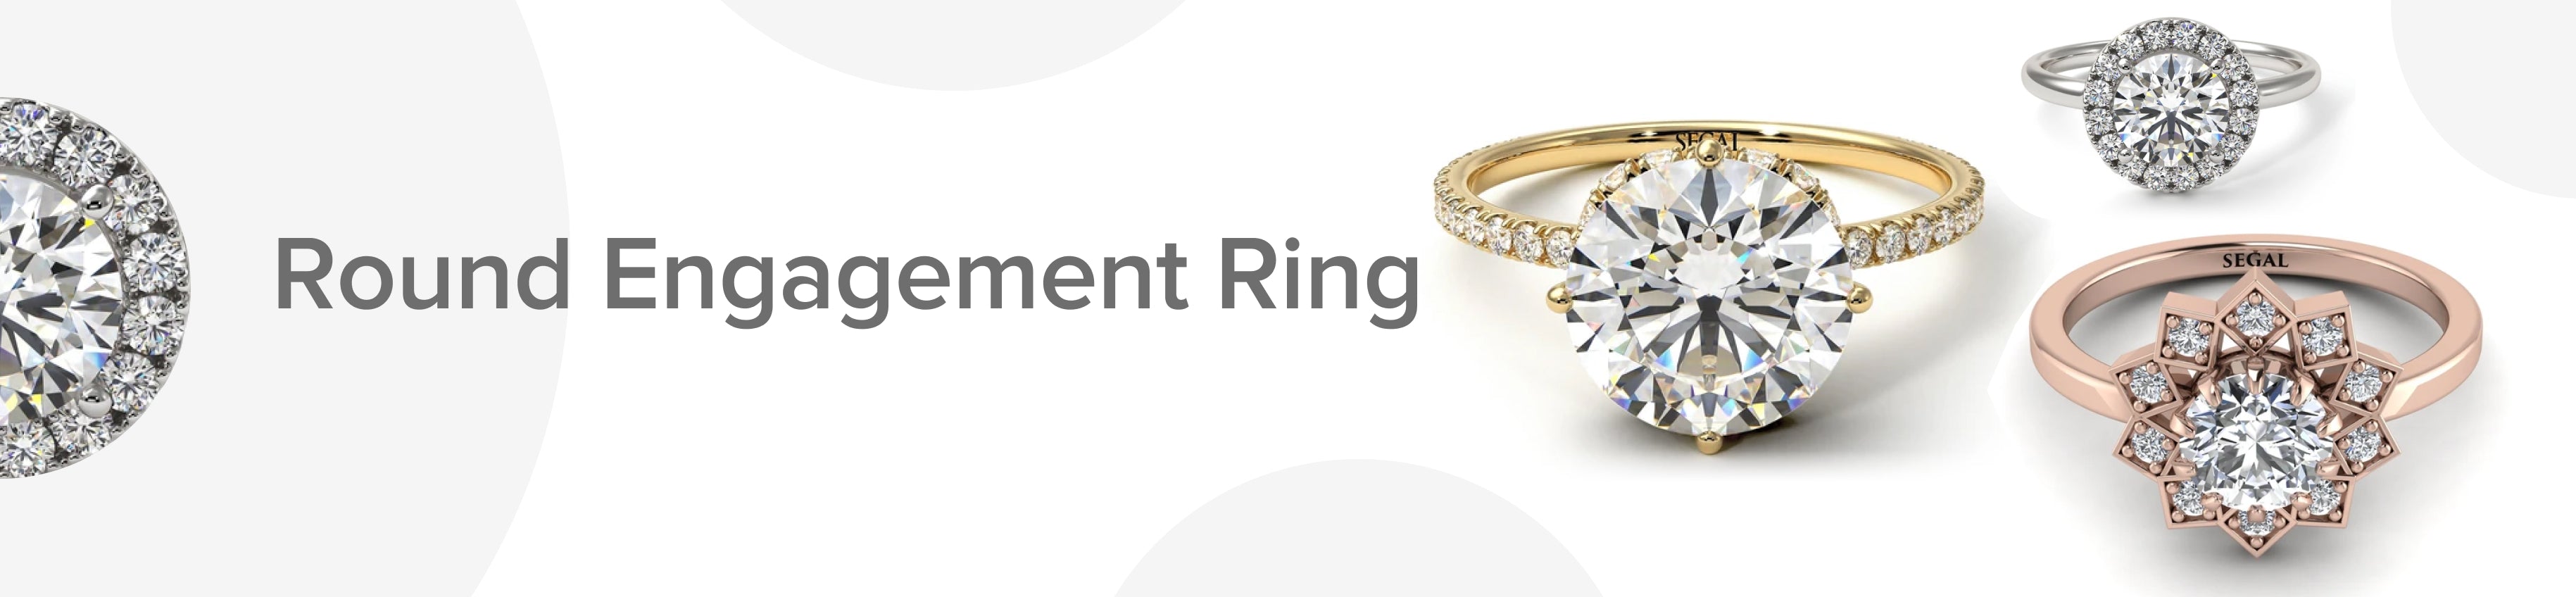 Round Engagement Ring Banner